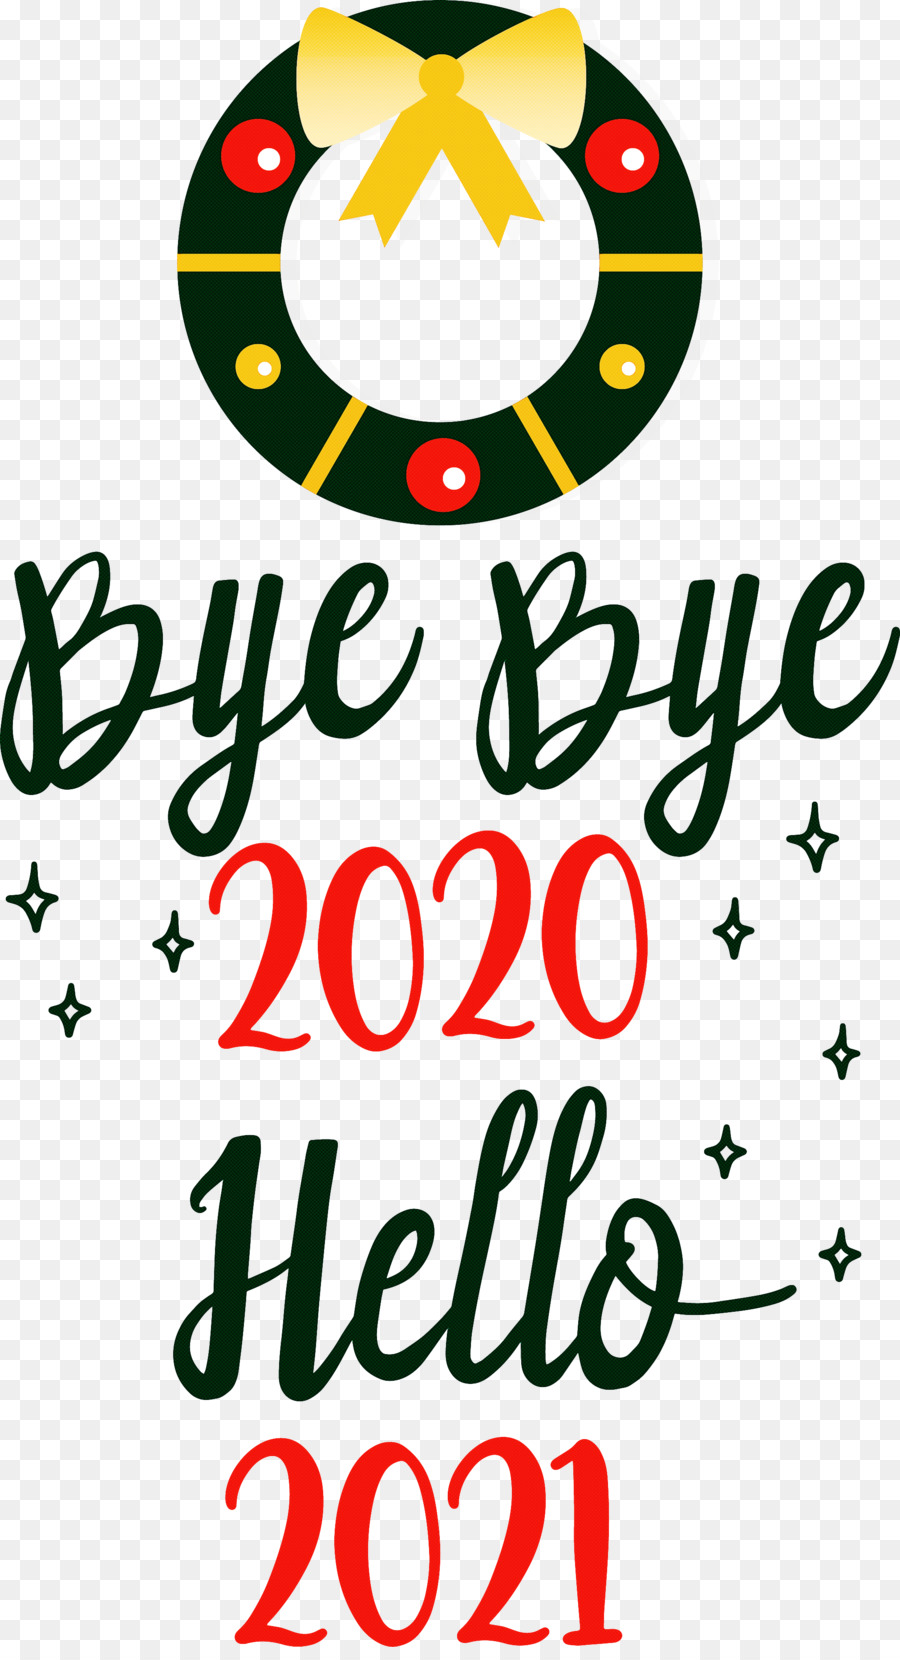 Hallo 2021 Jahr Tschüss 2020 Jahr - 